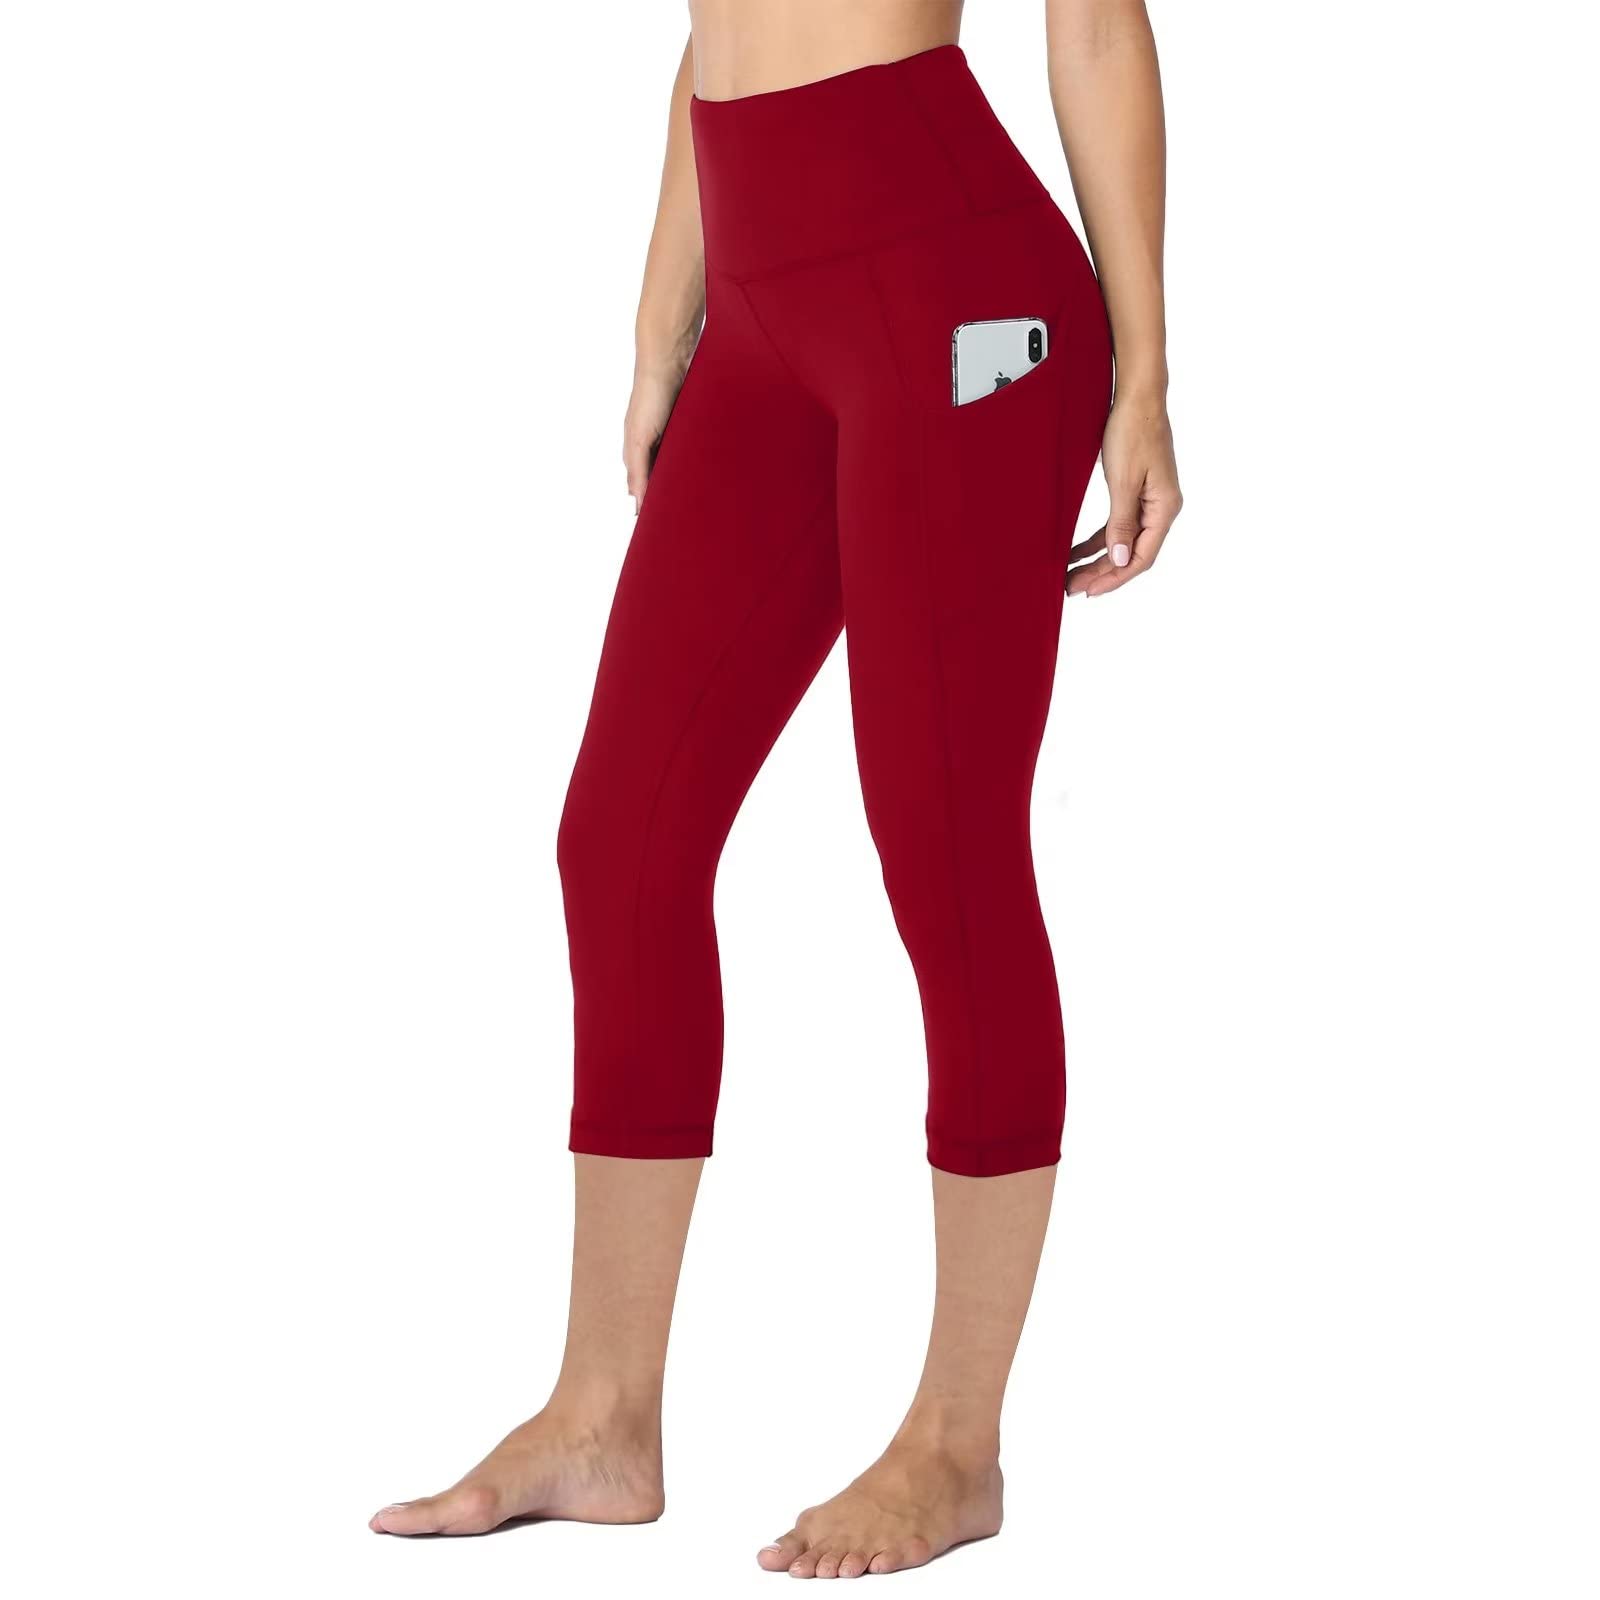  High Waisted Leggings For Women No See-Through Tummy Control  Yoga Pants Workout Leggings-Reg&Plus Size